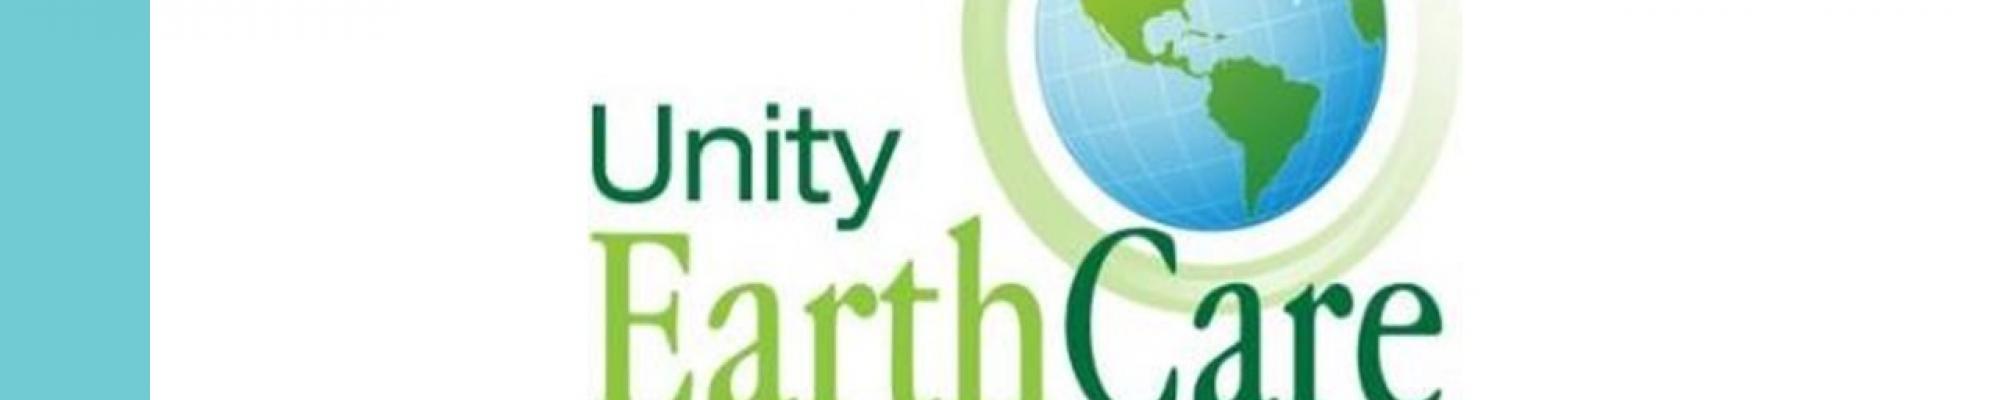 Unity Earthcare logo